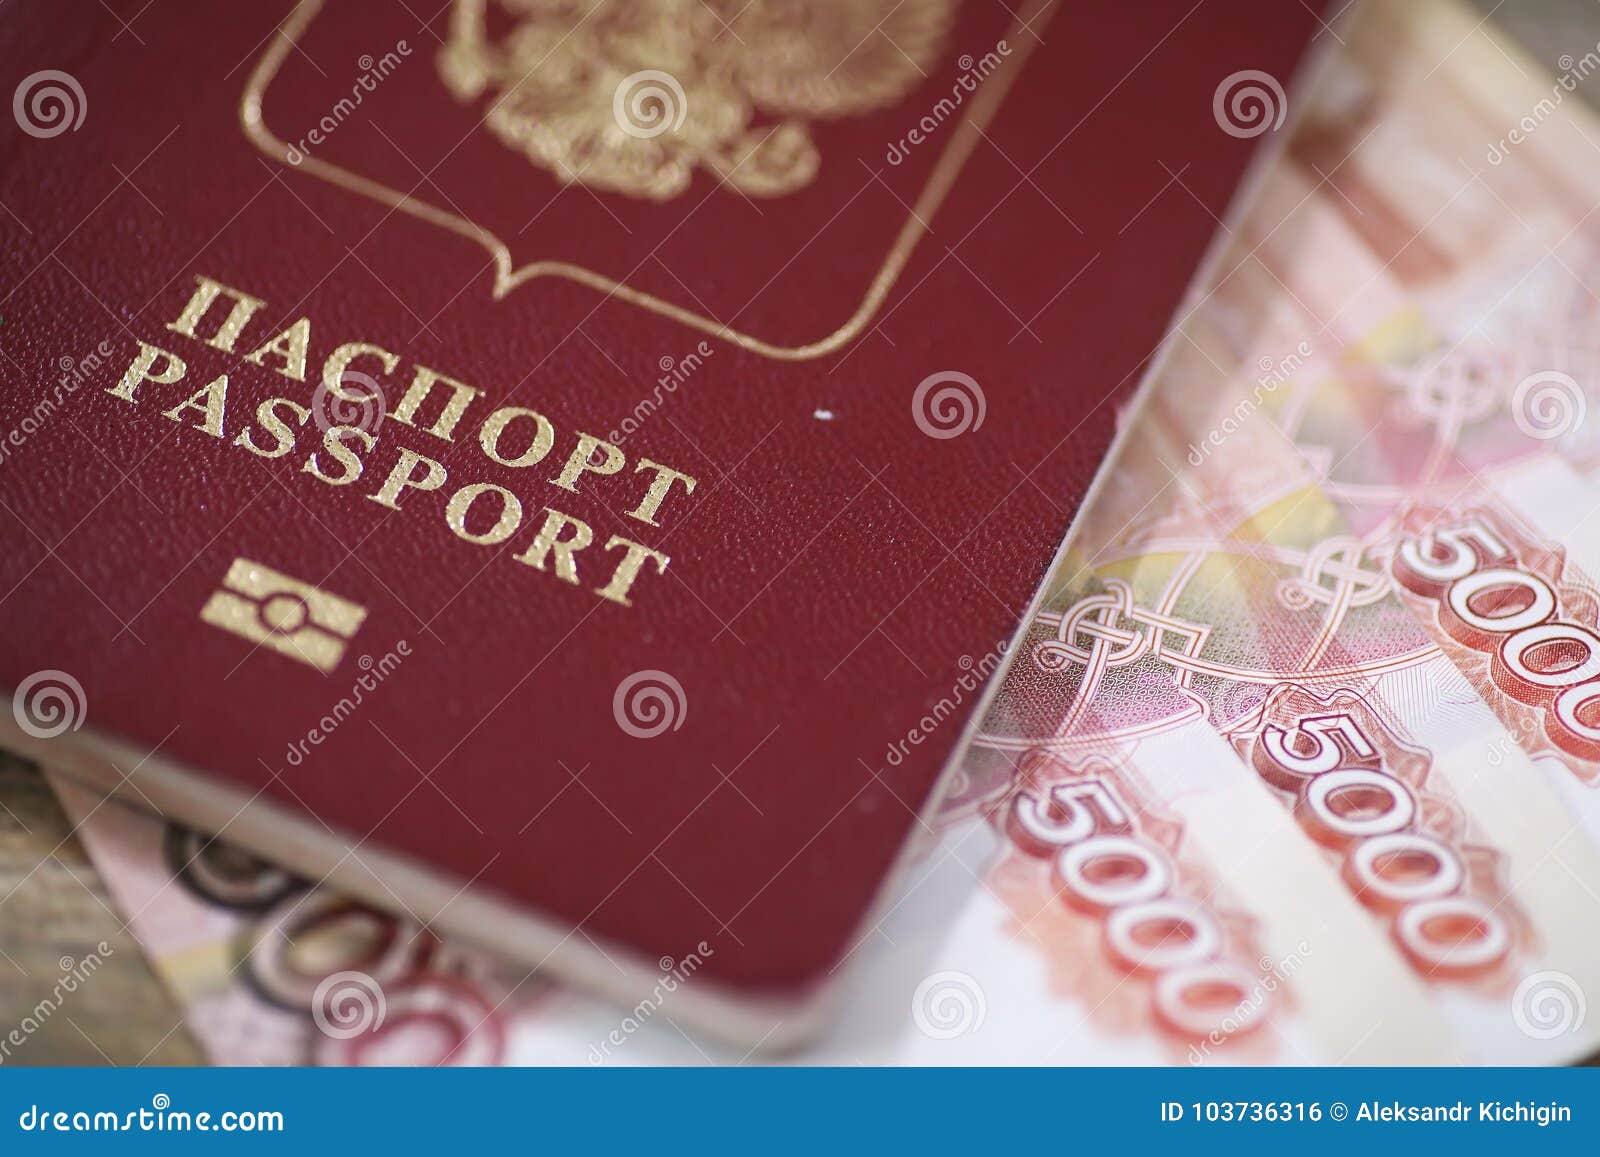 Микрозайм по паспорту в Краснодаре на кредитную карту